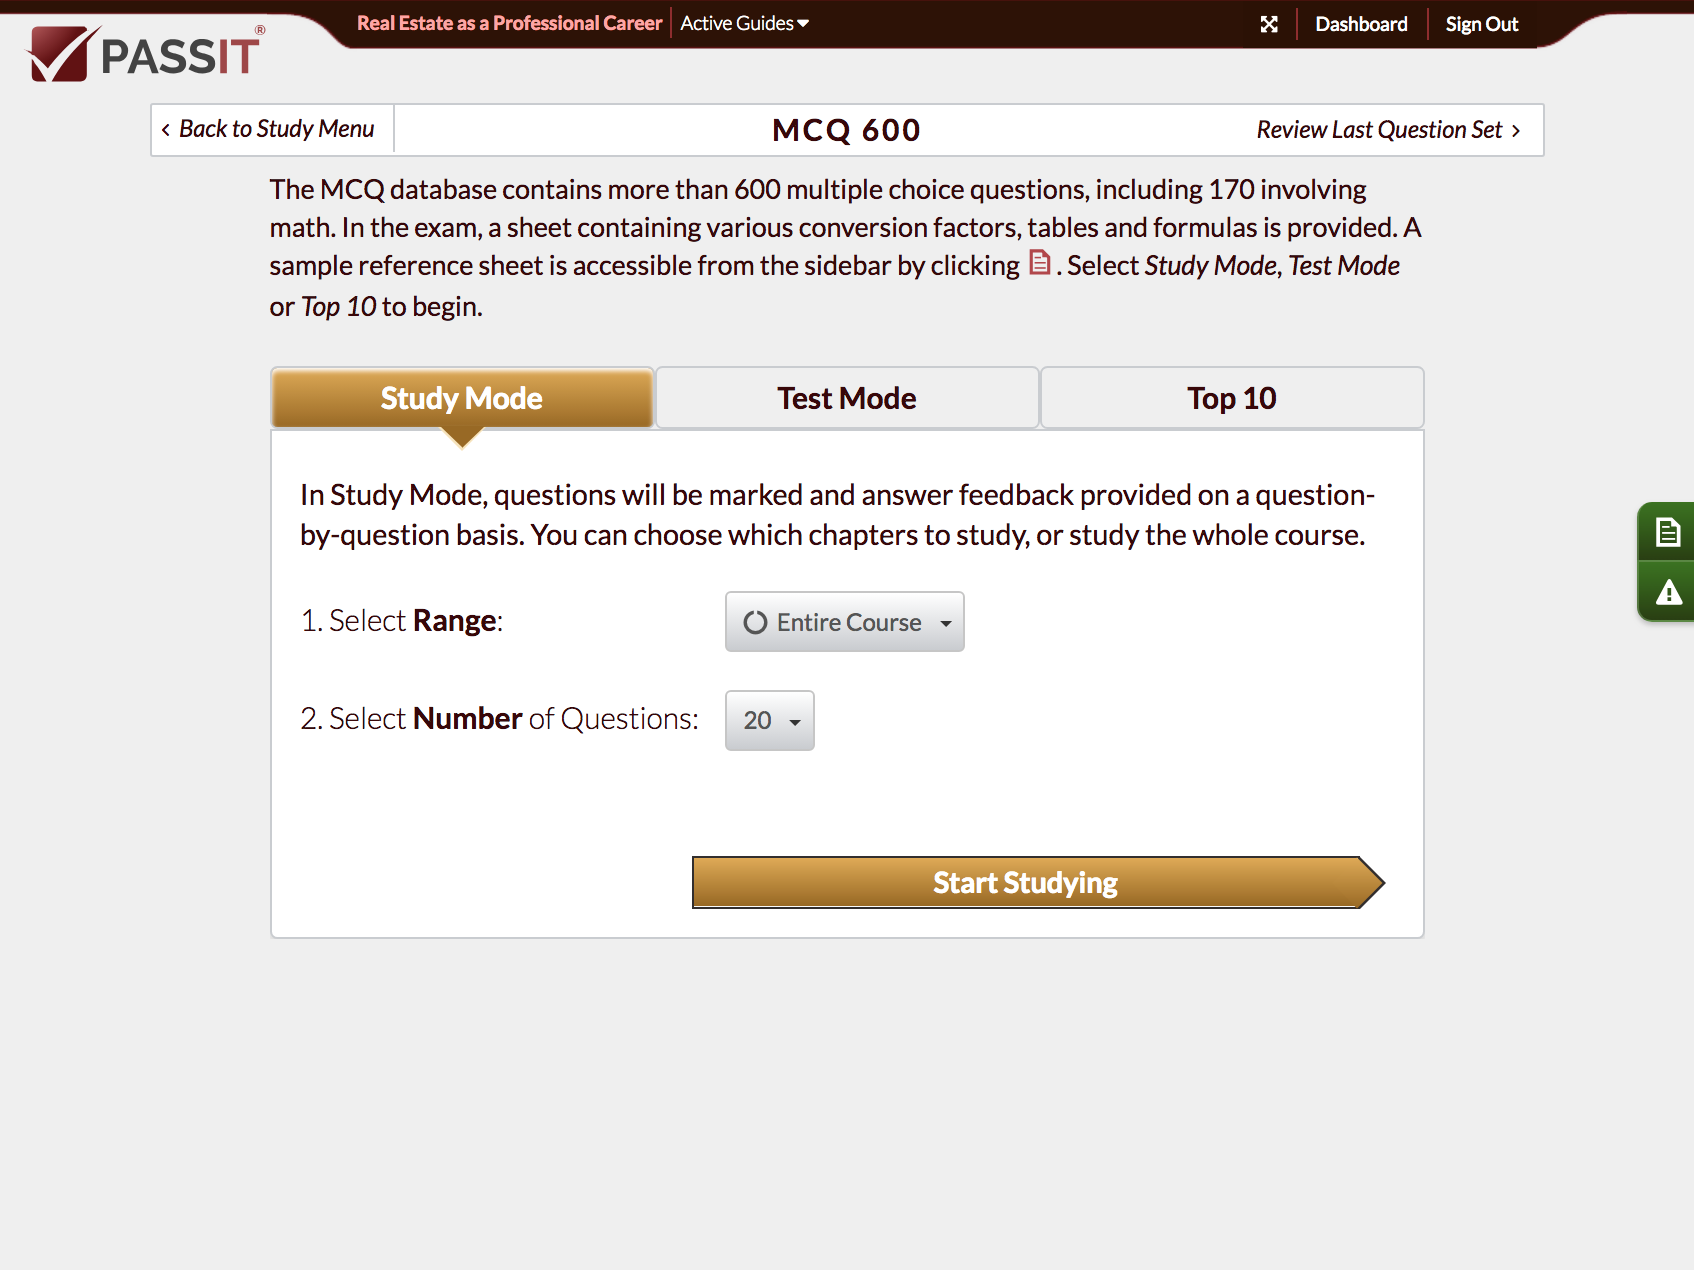 Snapshot of MCQ Menu Study Options